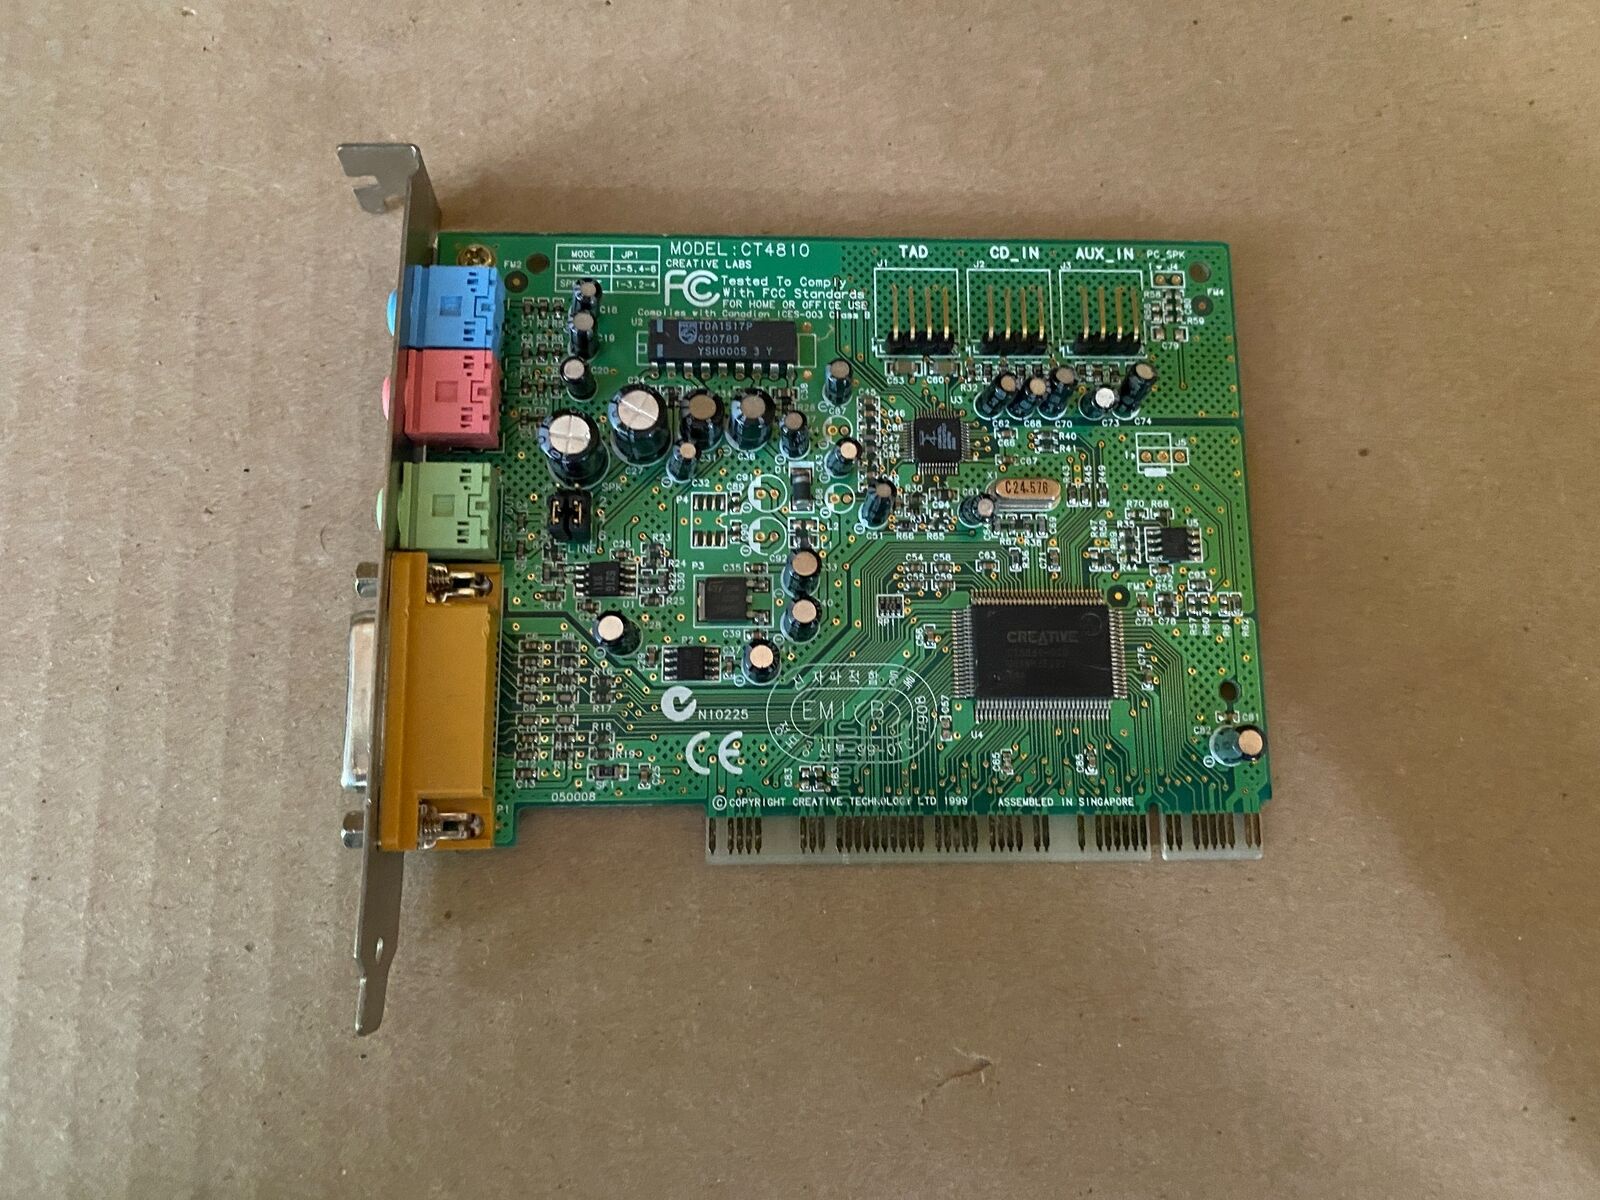 CREATIVE LABS SOUND BLASTER CT4810 PCI SOUND CARD F7-2(3)